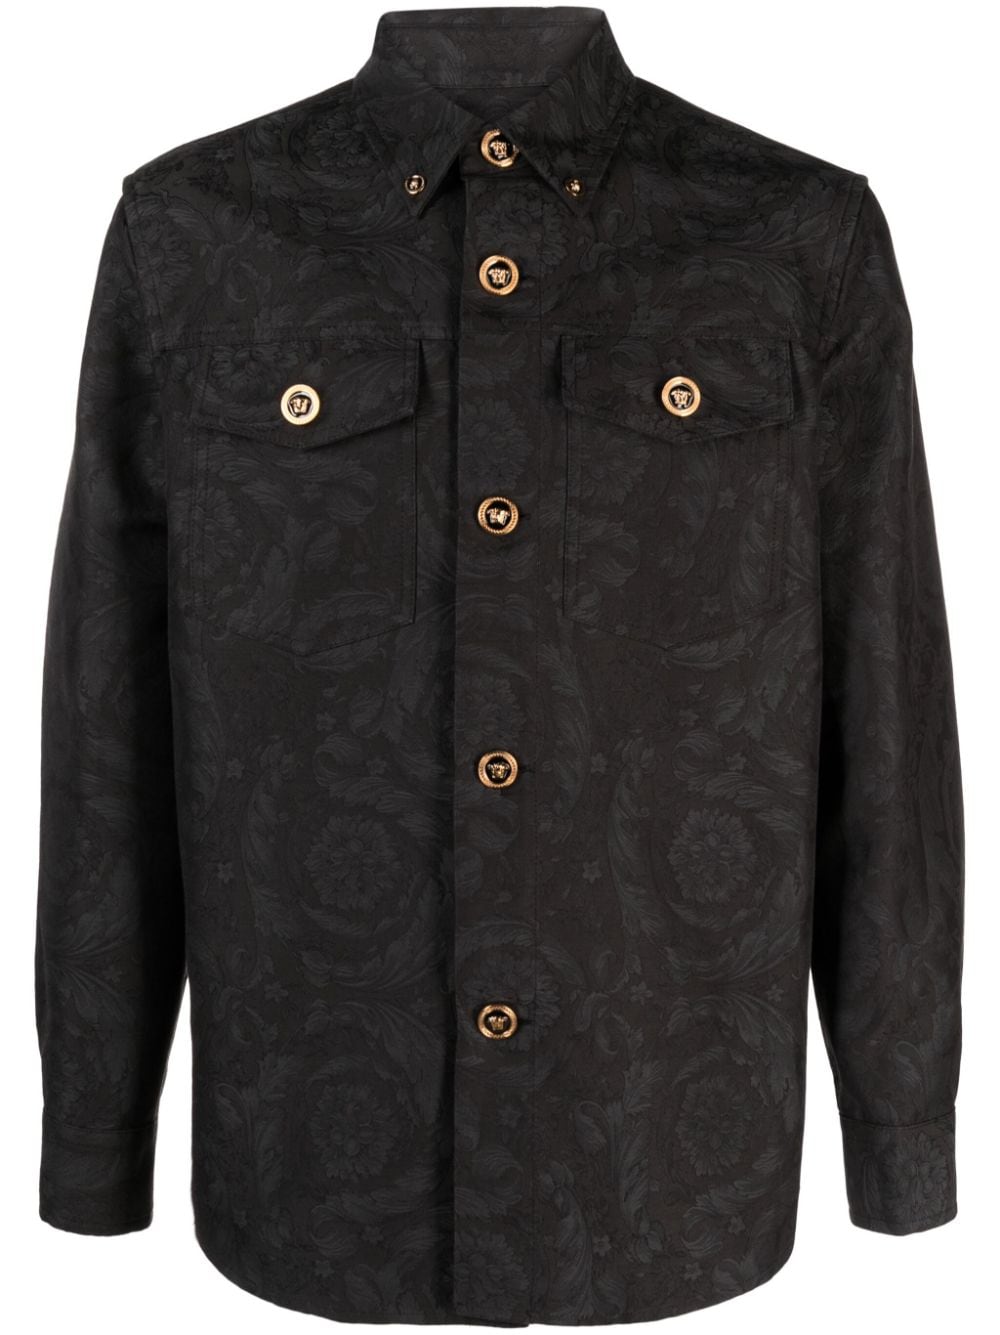 Barocco print jacket